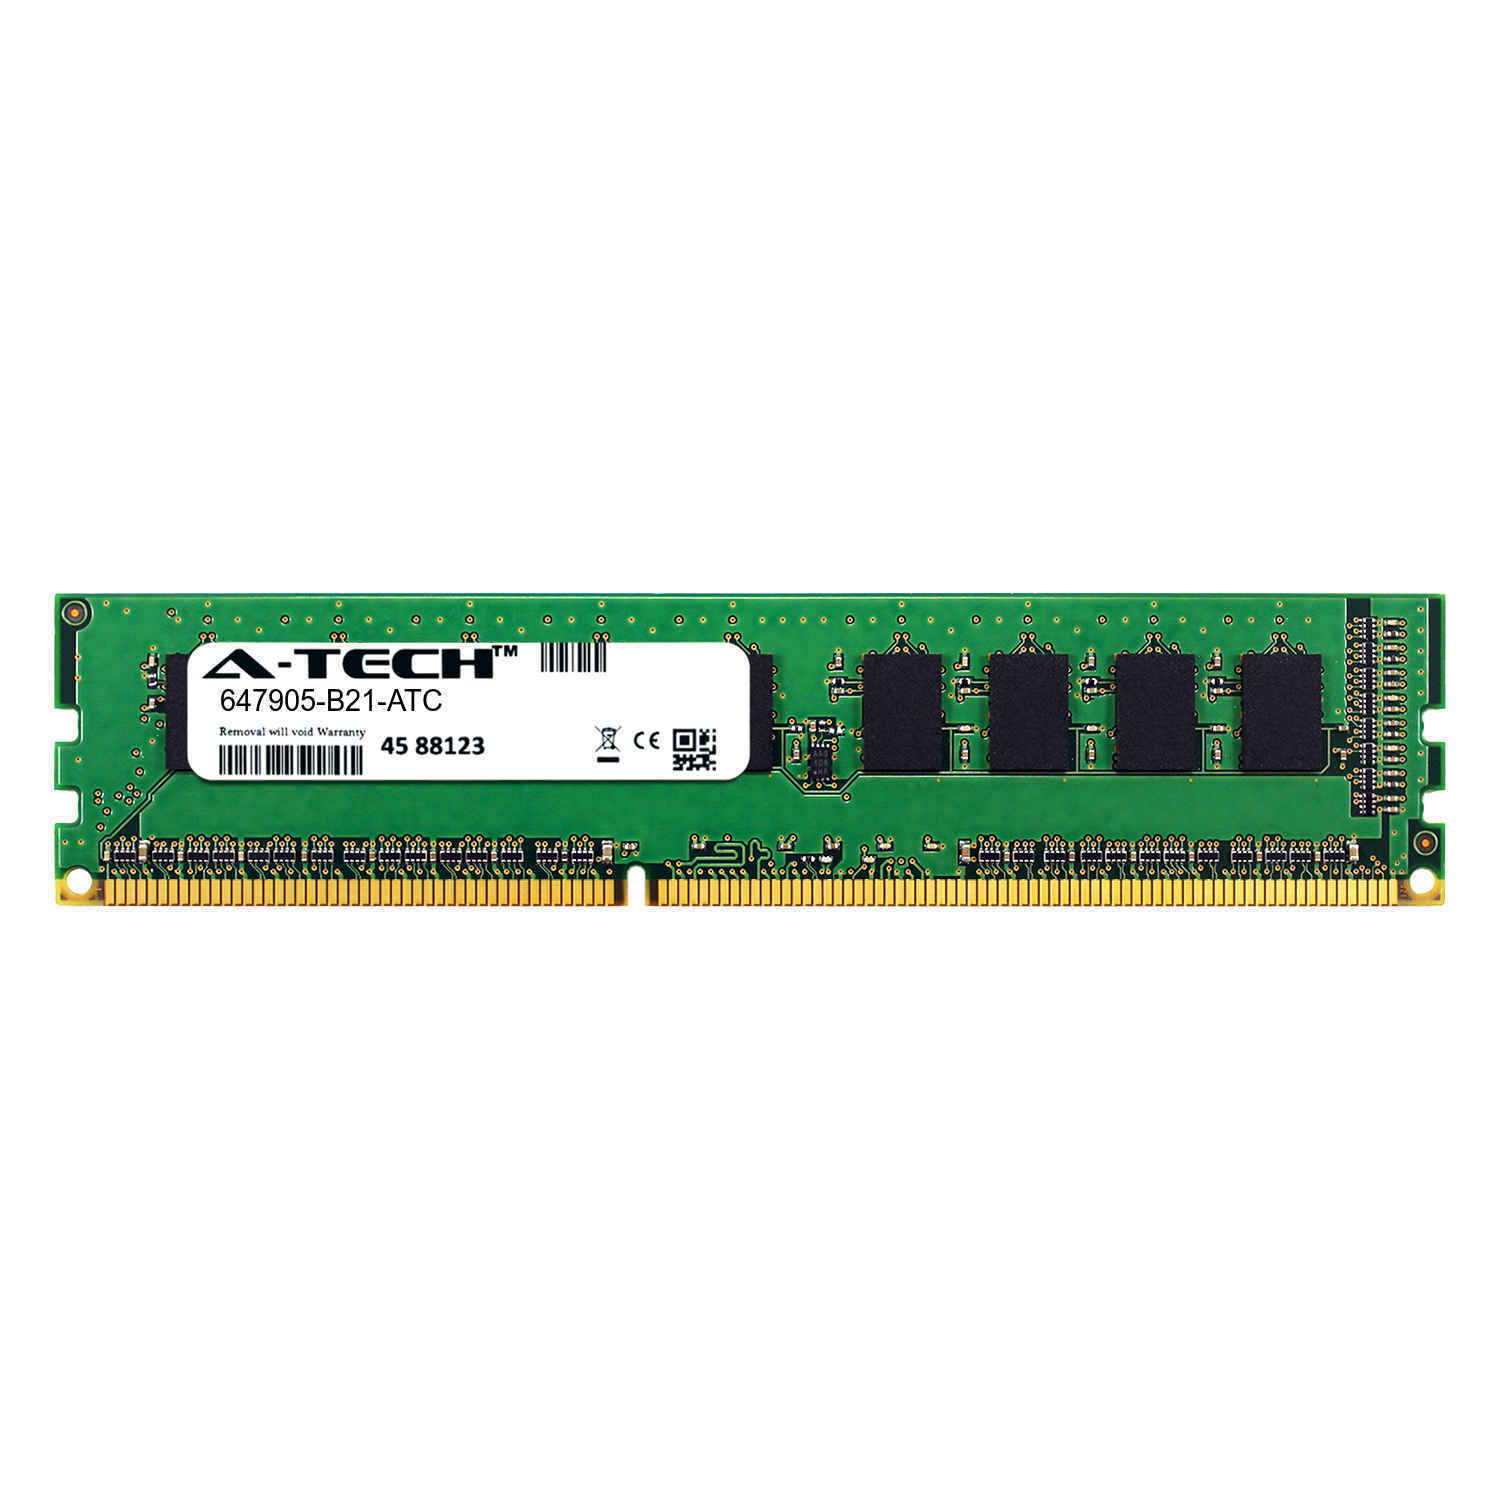 2GB DDR3 PC3-10600E ECC UDIMM (HP 647905-B21 Equivalent) Server Memory RAM